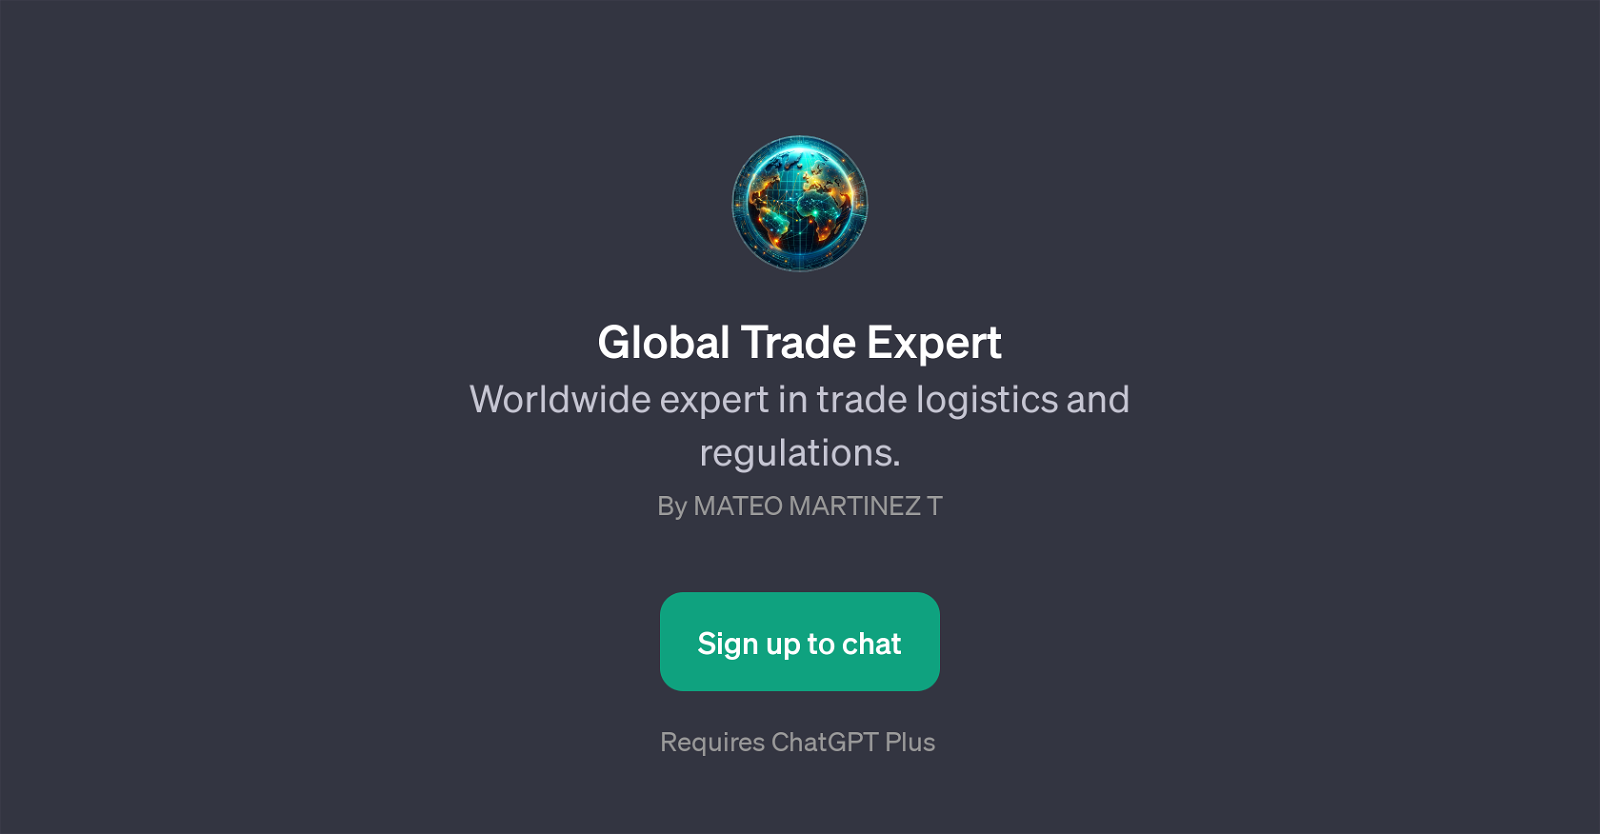 Global Trade Expert website